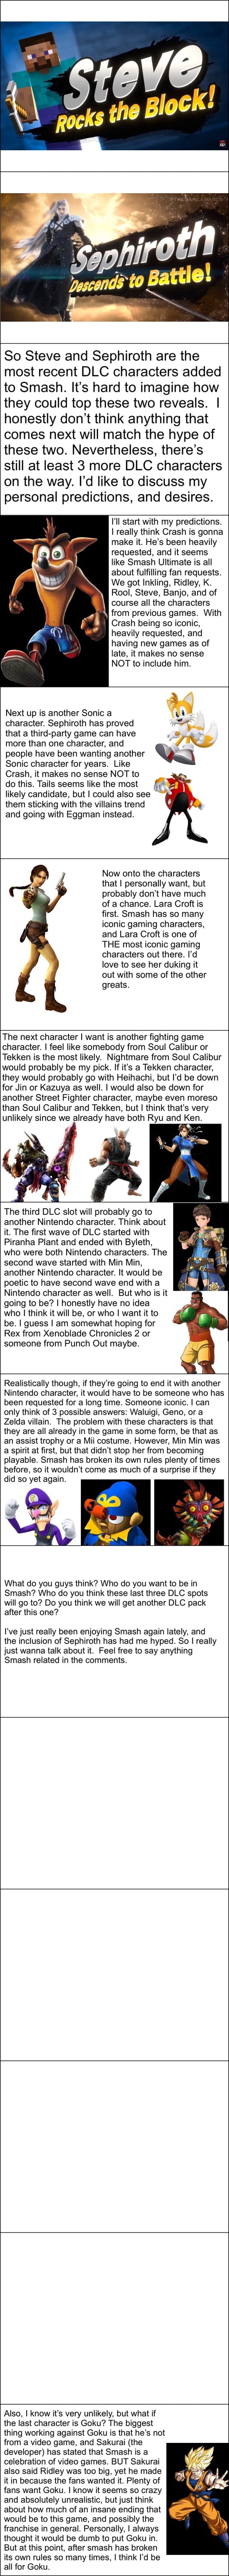 Crash Bandicoot in Smash Bros. Ultimate makes too much sense not